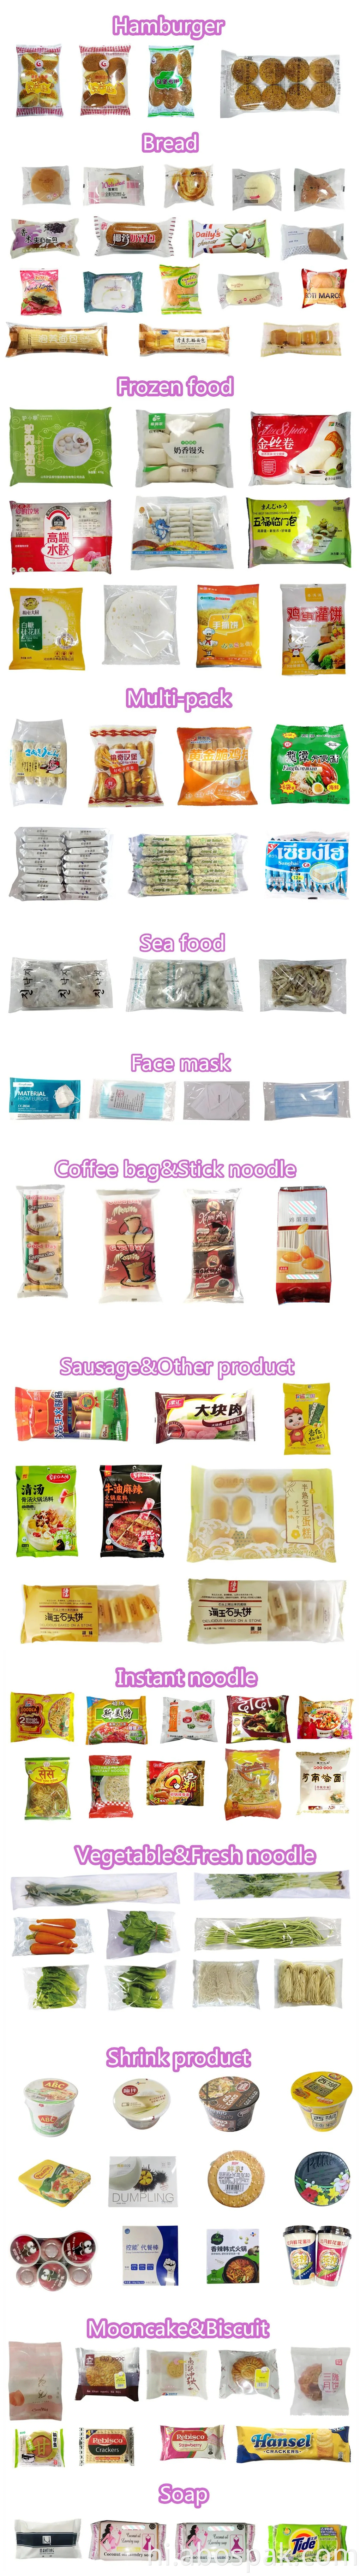 खाद्य टुकड़े समूह माध्यमिक लपेटें स्वत: बॉक्स मोशन फ्लो तकिया बैग सील पैकेजिंग मशीनरी पैकिंग